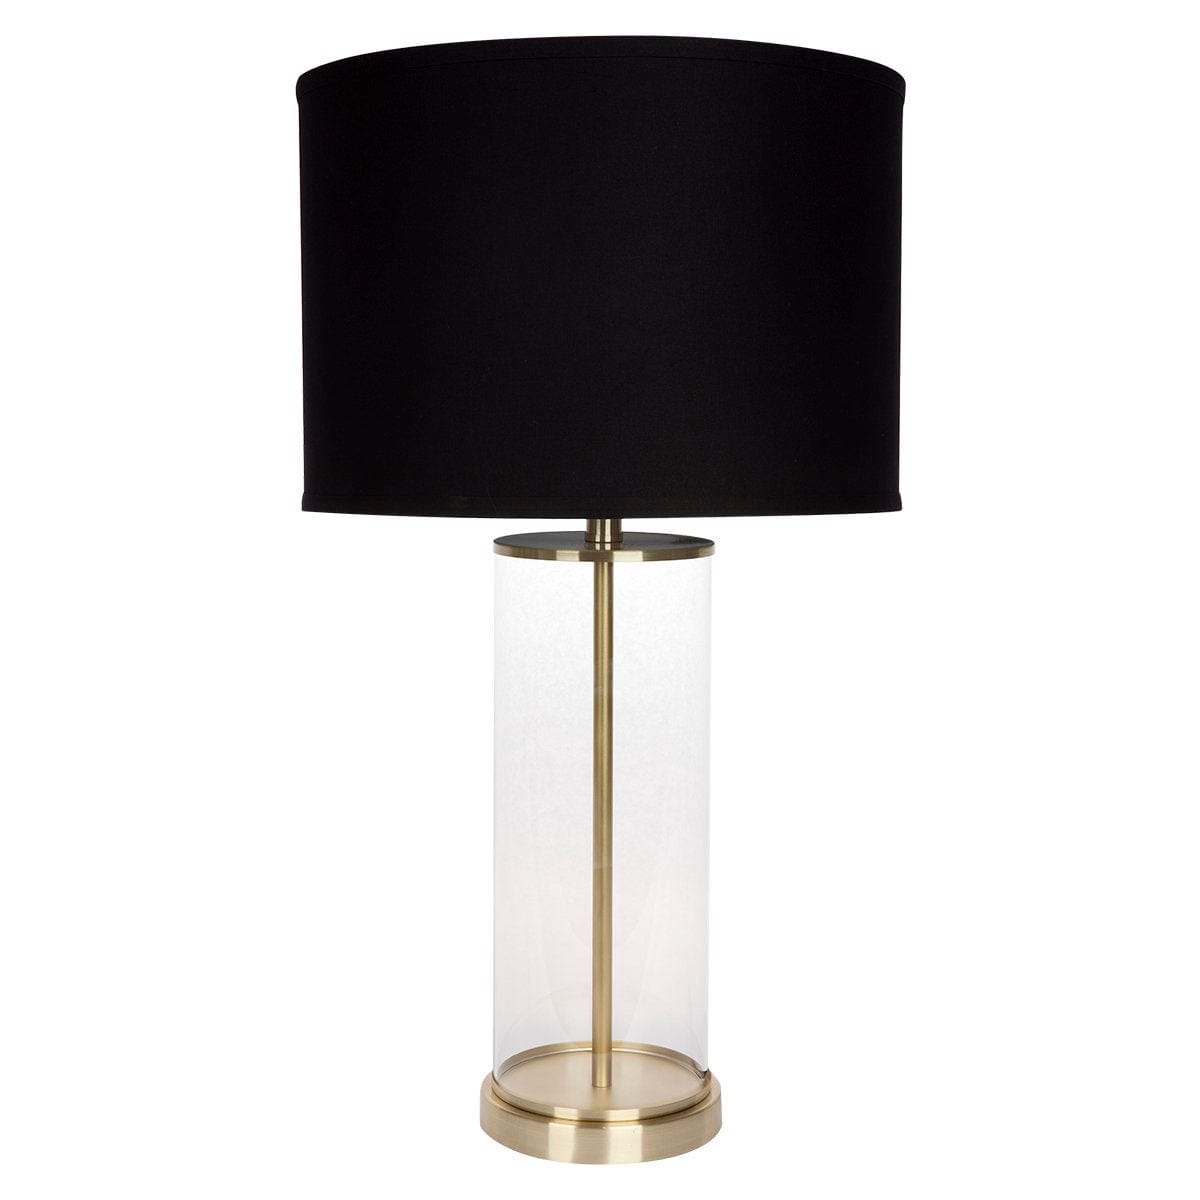 CAFE LIGHTING & LIVING Table Lamp Left Bank Table Lamp - Brass w Black Shade B12267